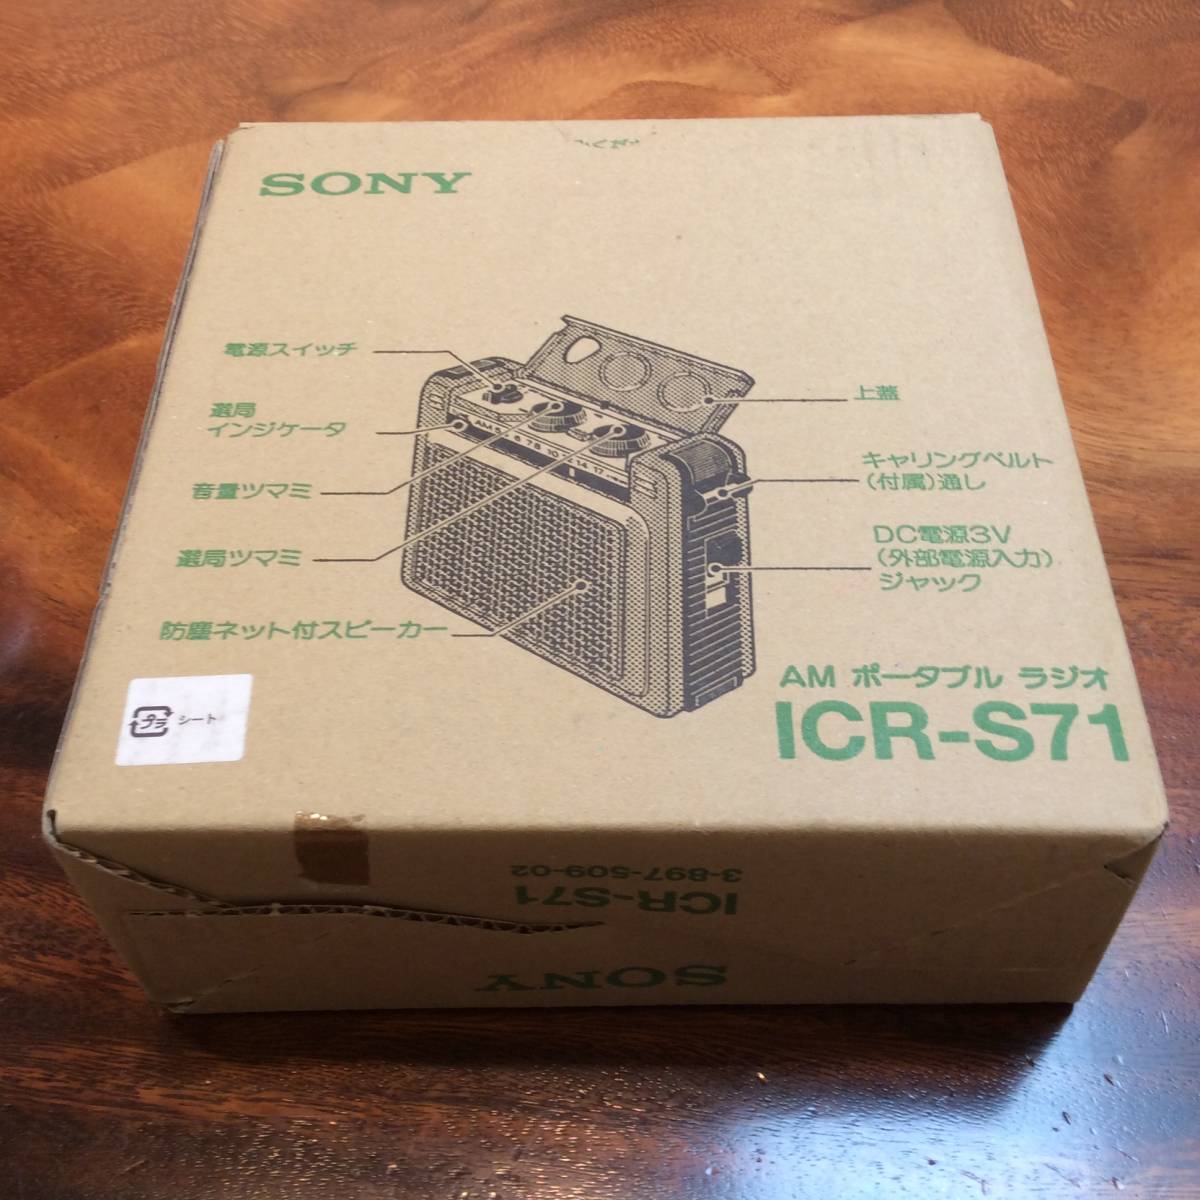 SONY索尼收音機ICR-S71全新未使用的項目 原文:SONY ソニー ラジオ ICR-S71 新品 未使用品